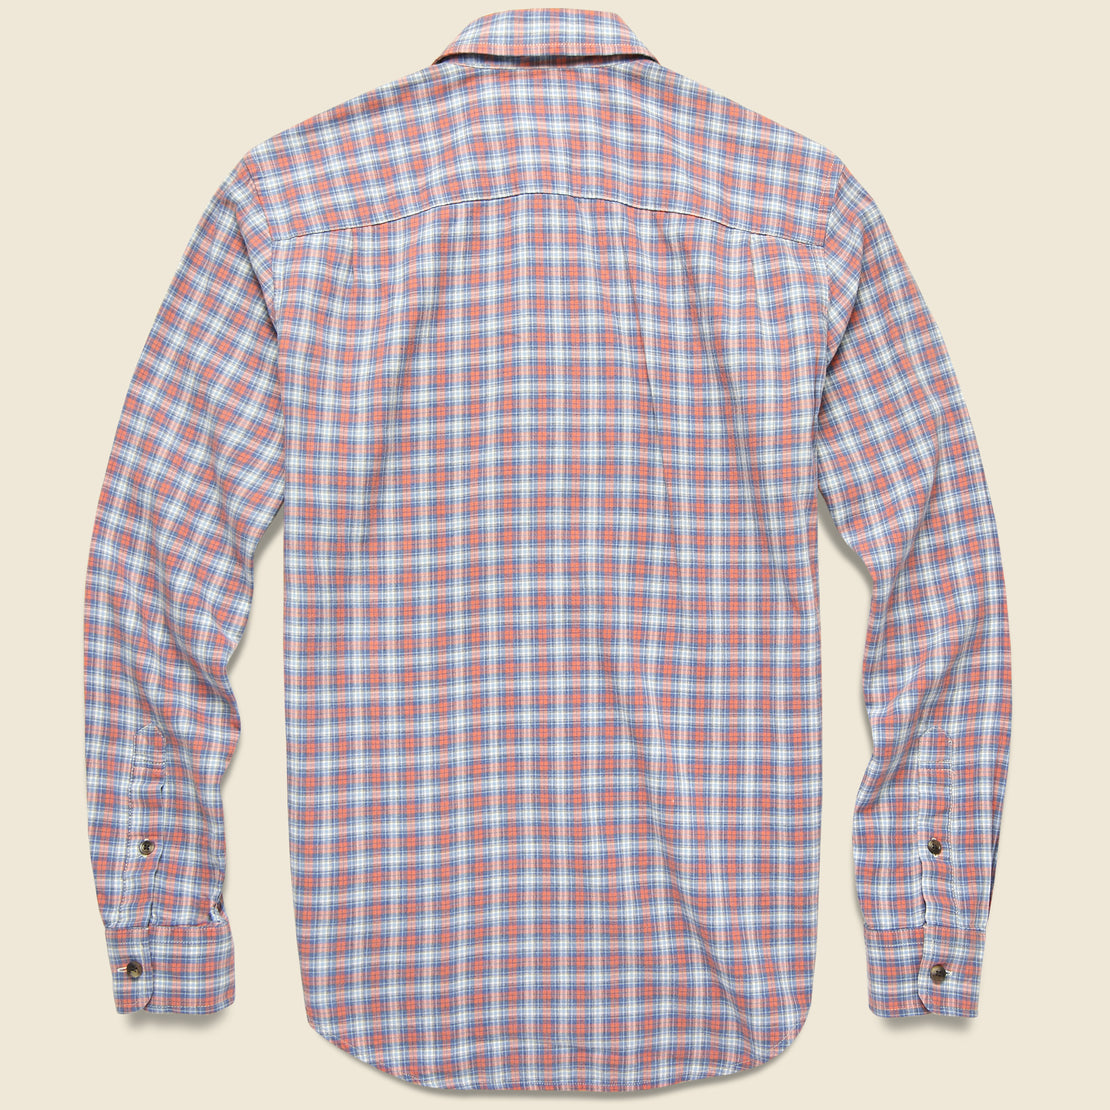 Movement Melange Shirt - Half Moon Bay Plaid - Faherty - STAG Provisions - Tops - L/S Woven - Plaid